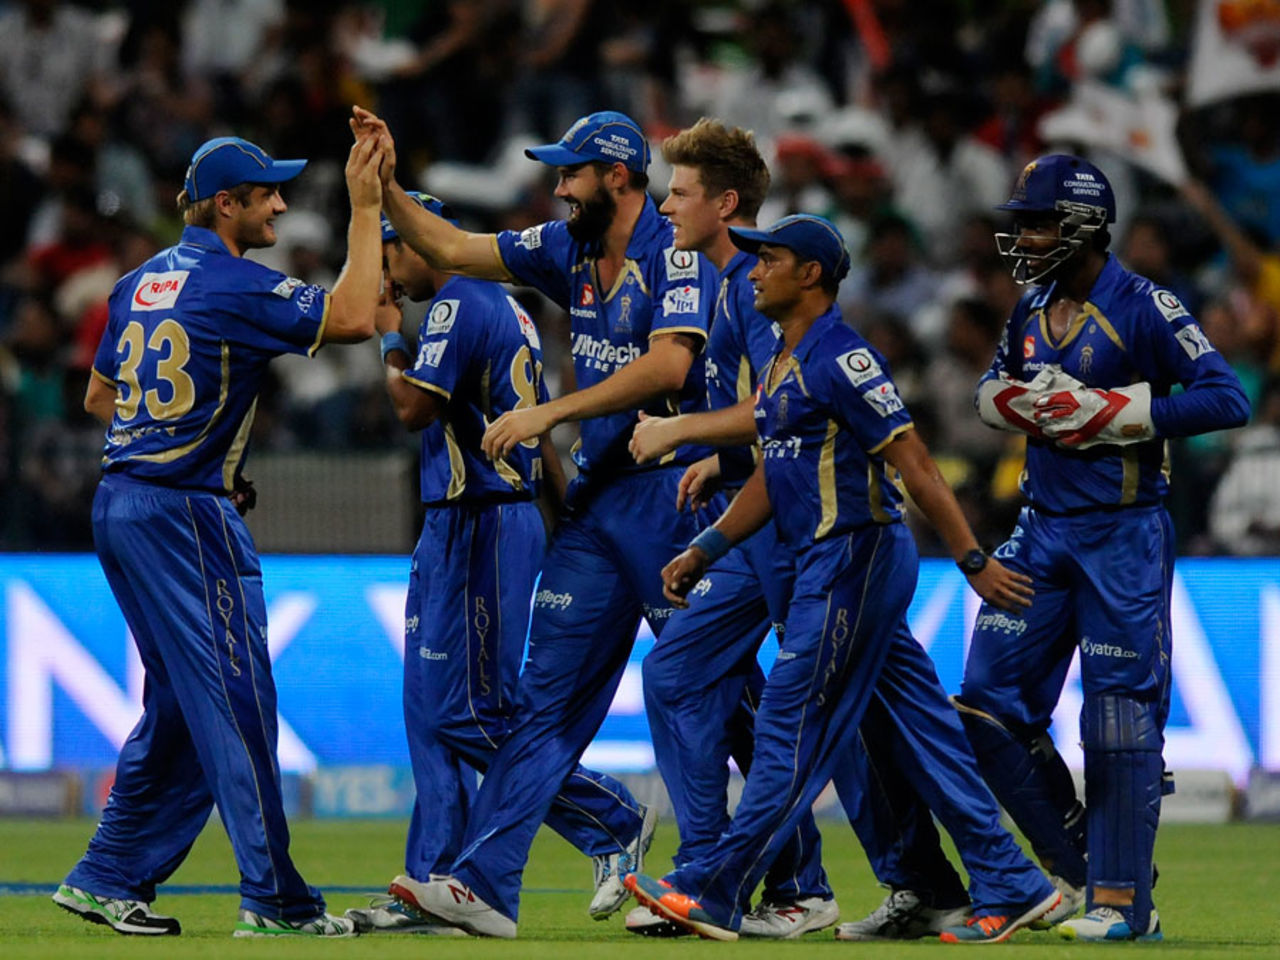 Shane Watson managed his bowlers quite well, Sunrisers Hyderabad v Rajasthan Royals, IPL 2014, Abu Dhabi, April 18, 2014